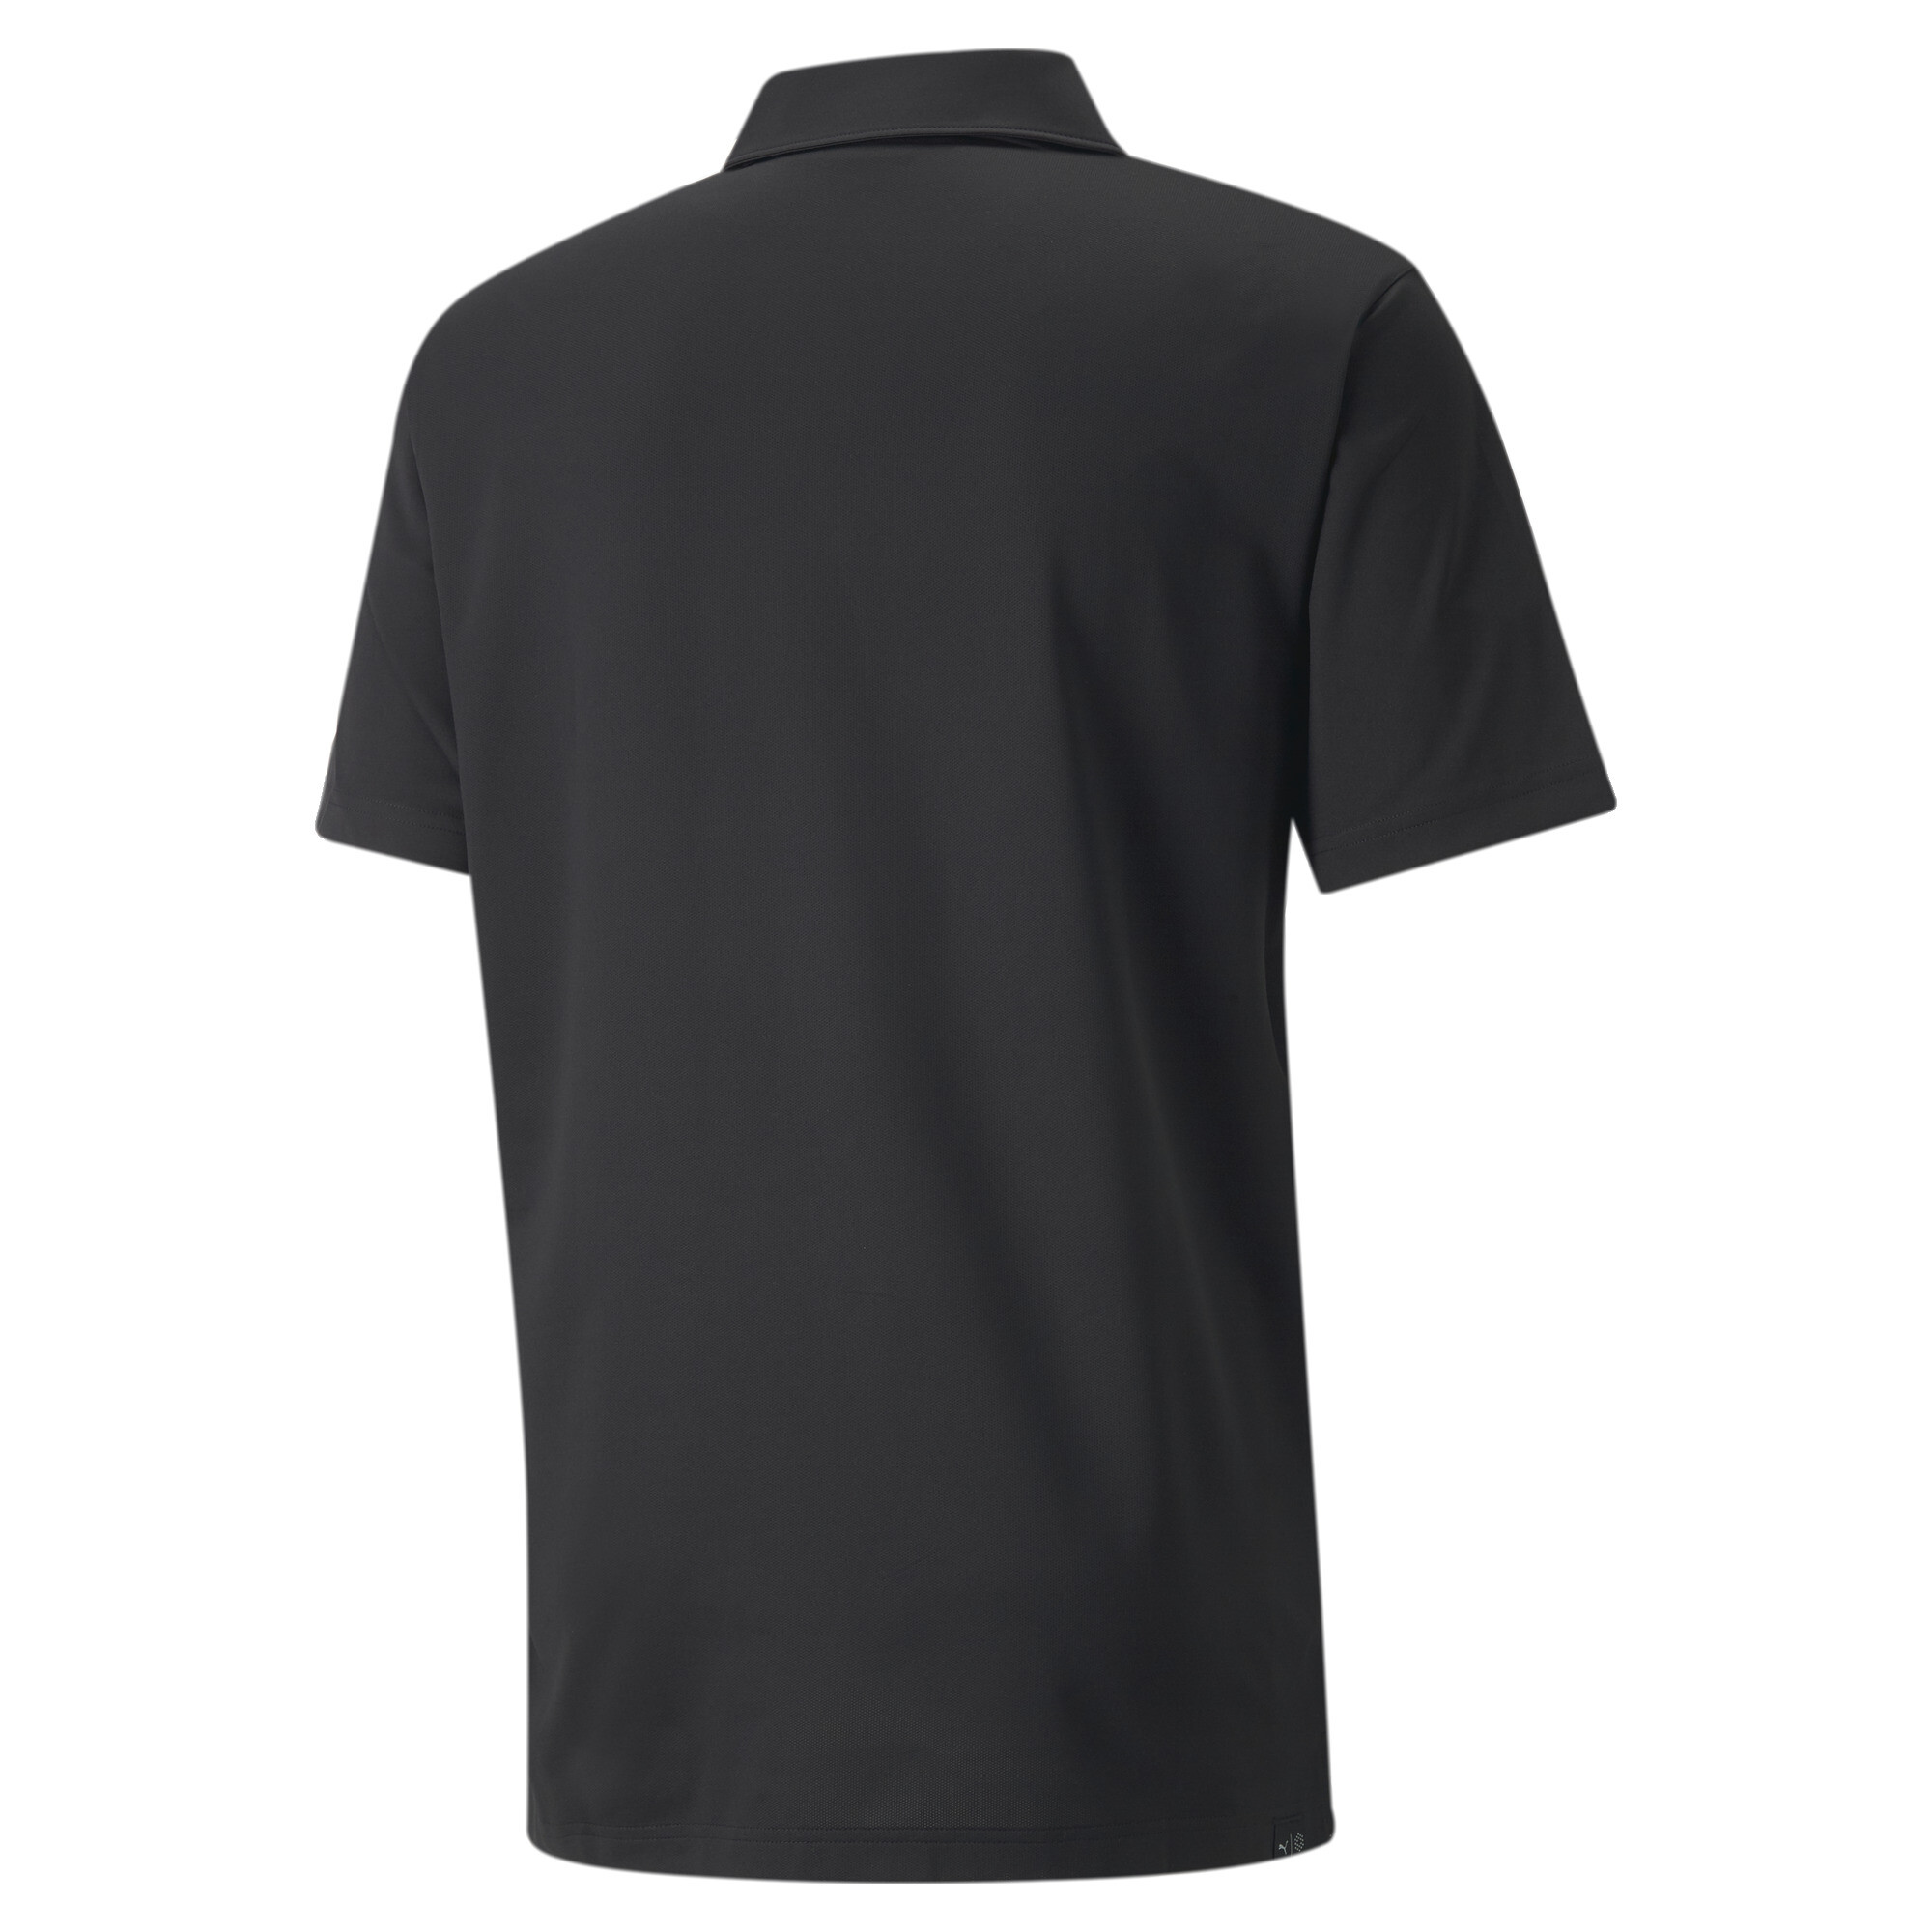 Men's Puma Gamer's Golf Polo Shirt T-Shirt, Black T-Shirt, Size 5XL T-Shirt, Clothing